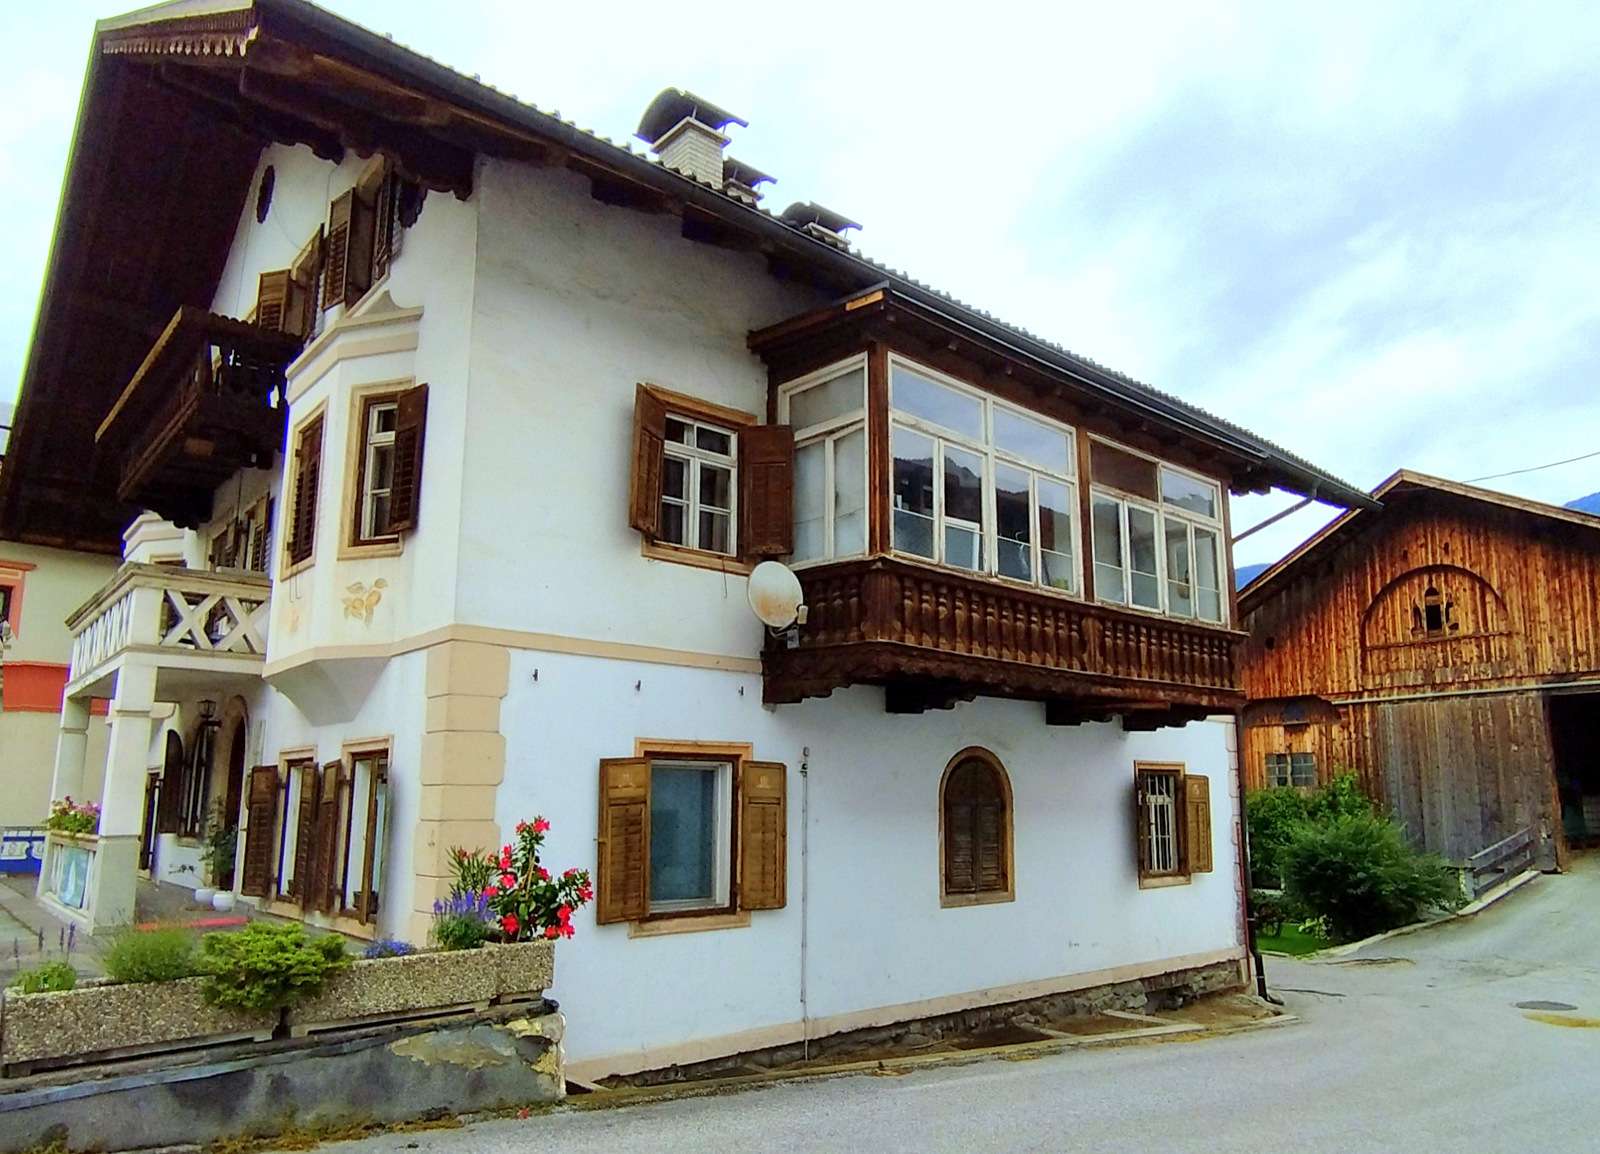 Architektura Tyrolska. Krásný dům ve Fügenu (Rakousko) skládačky online